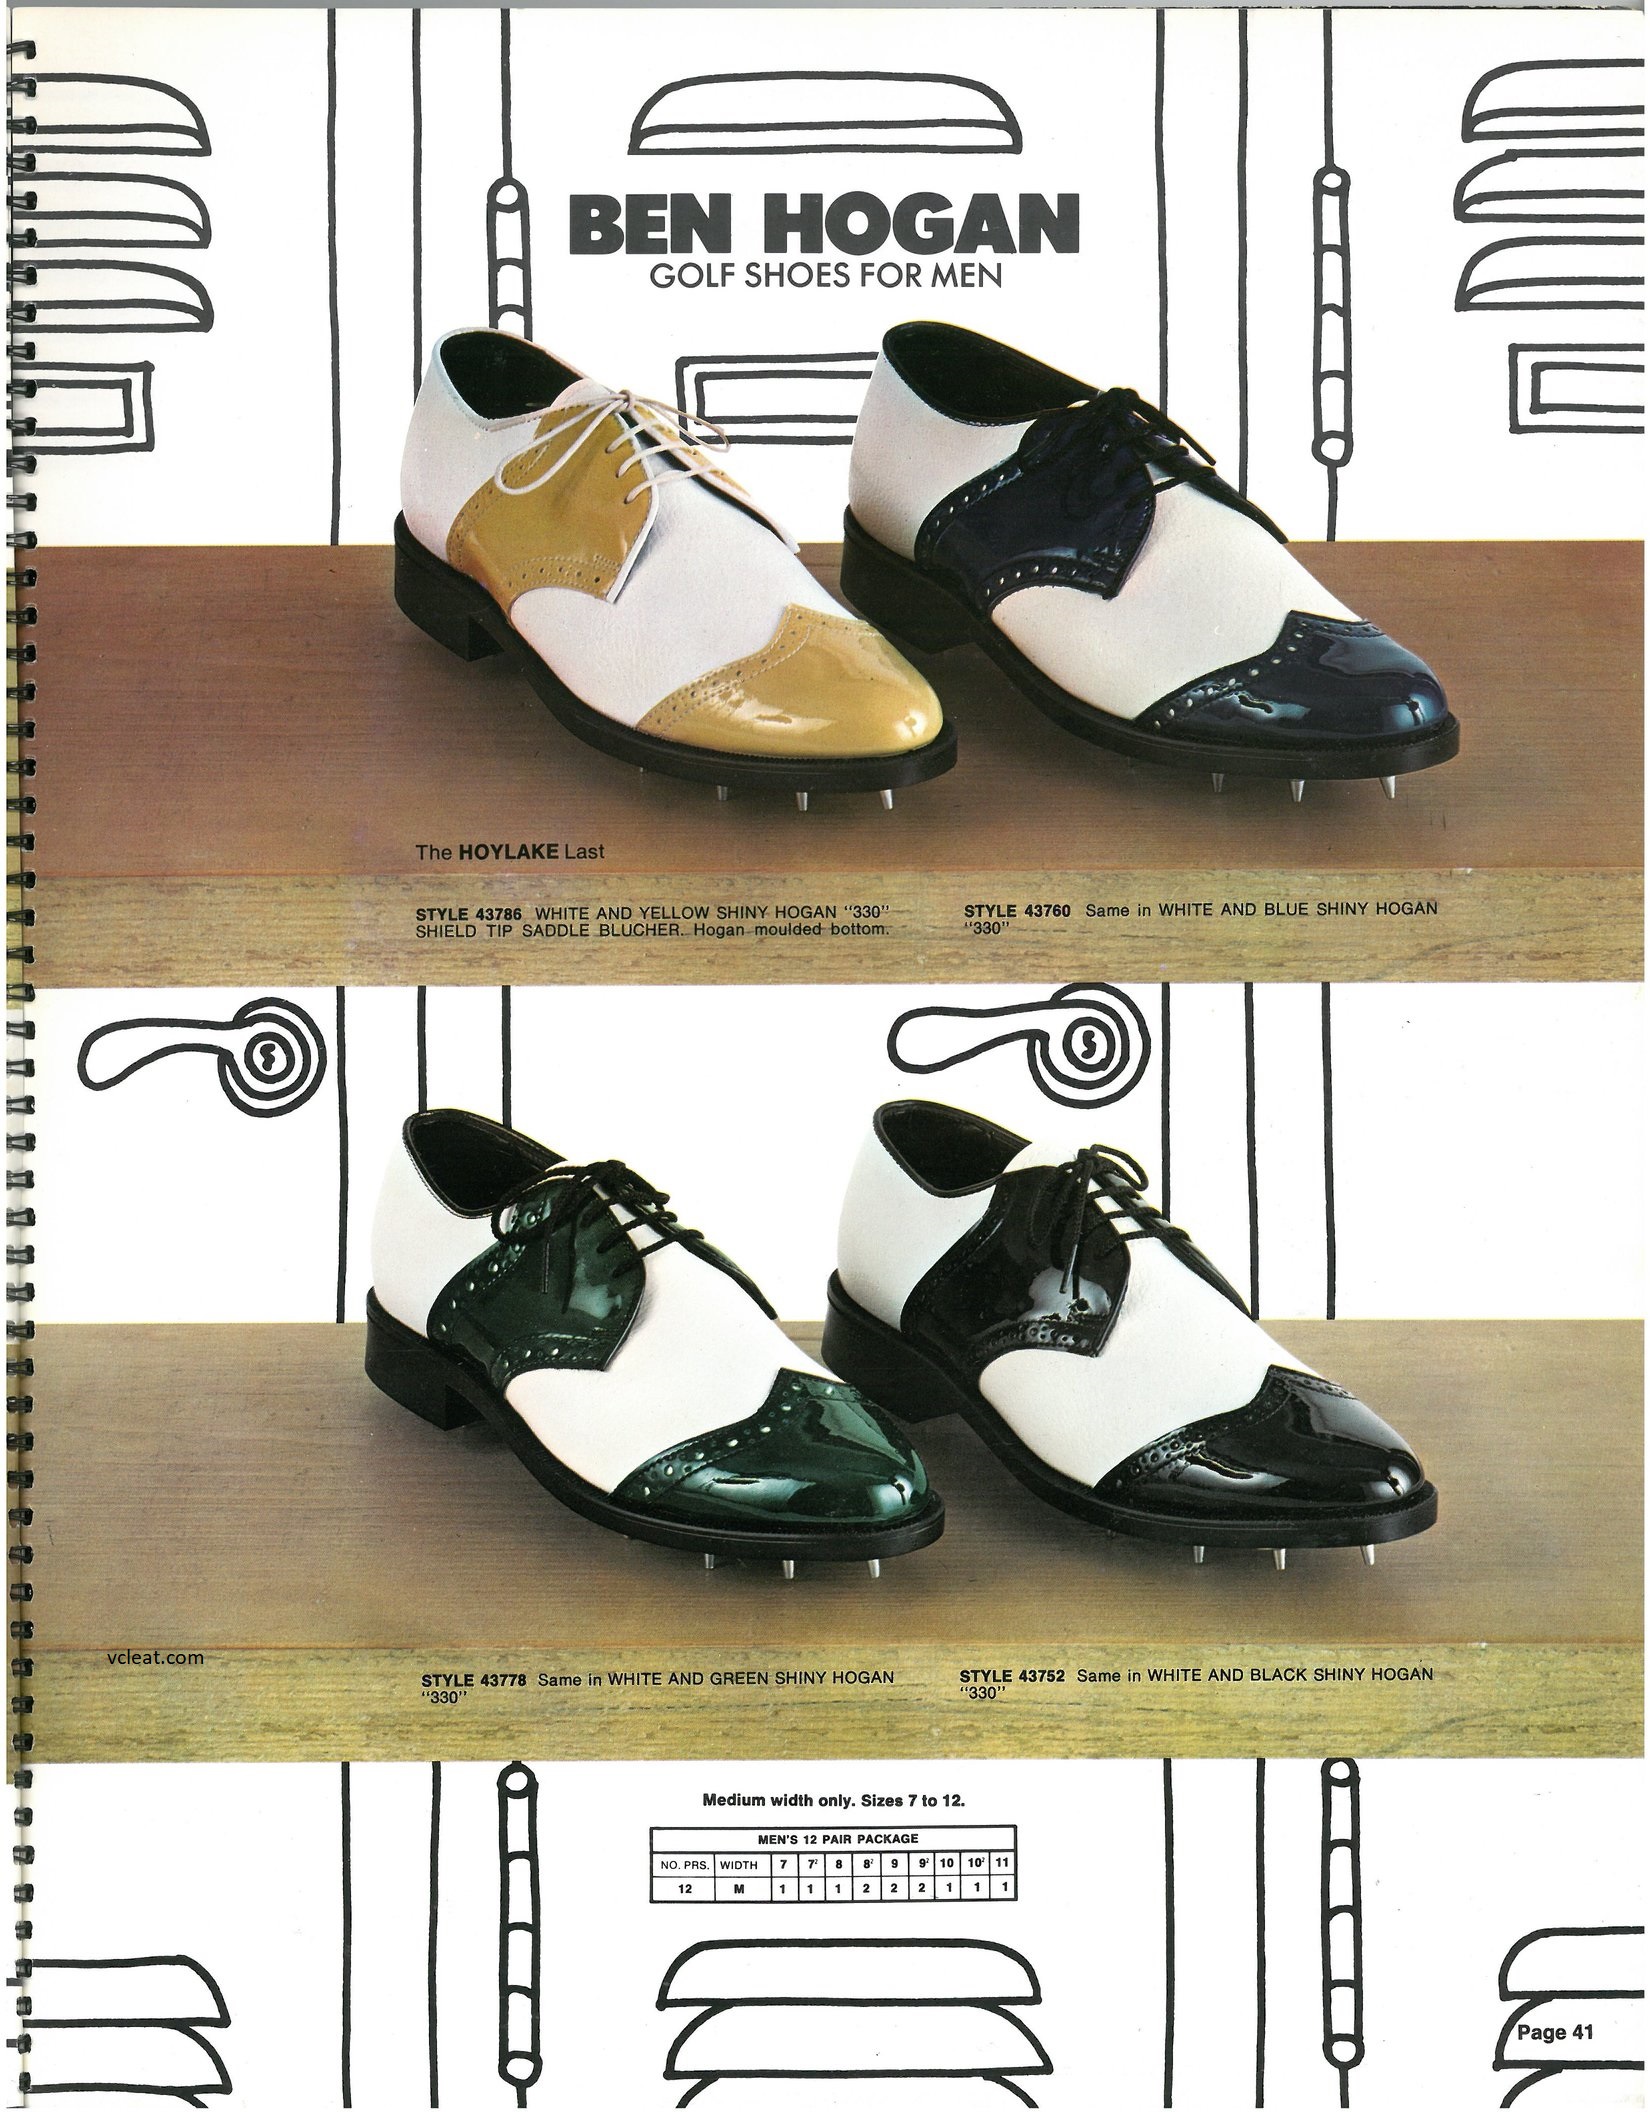 1970 Foot-Joy Ben Hogan Golf Shoes